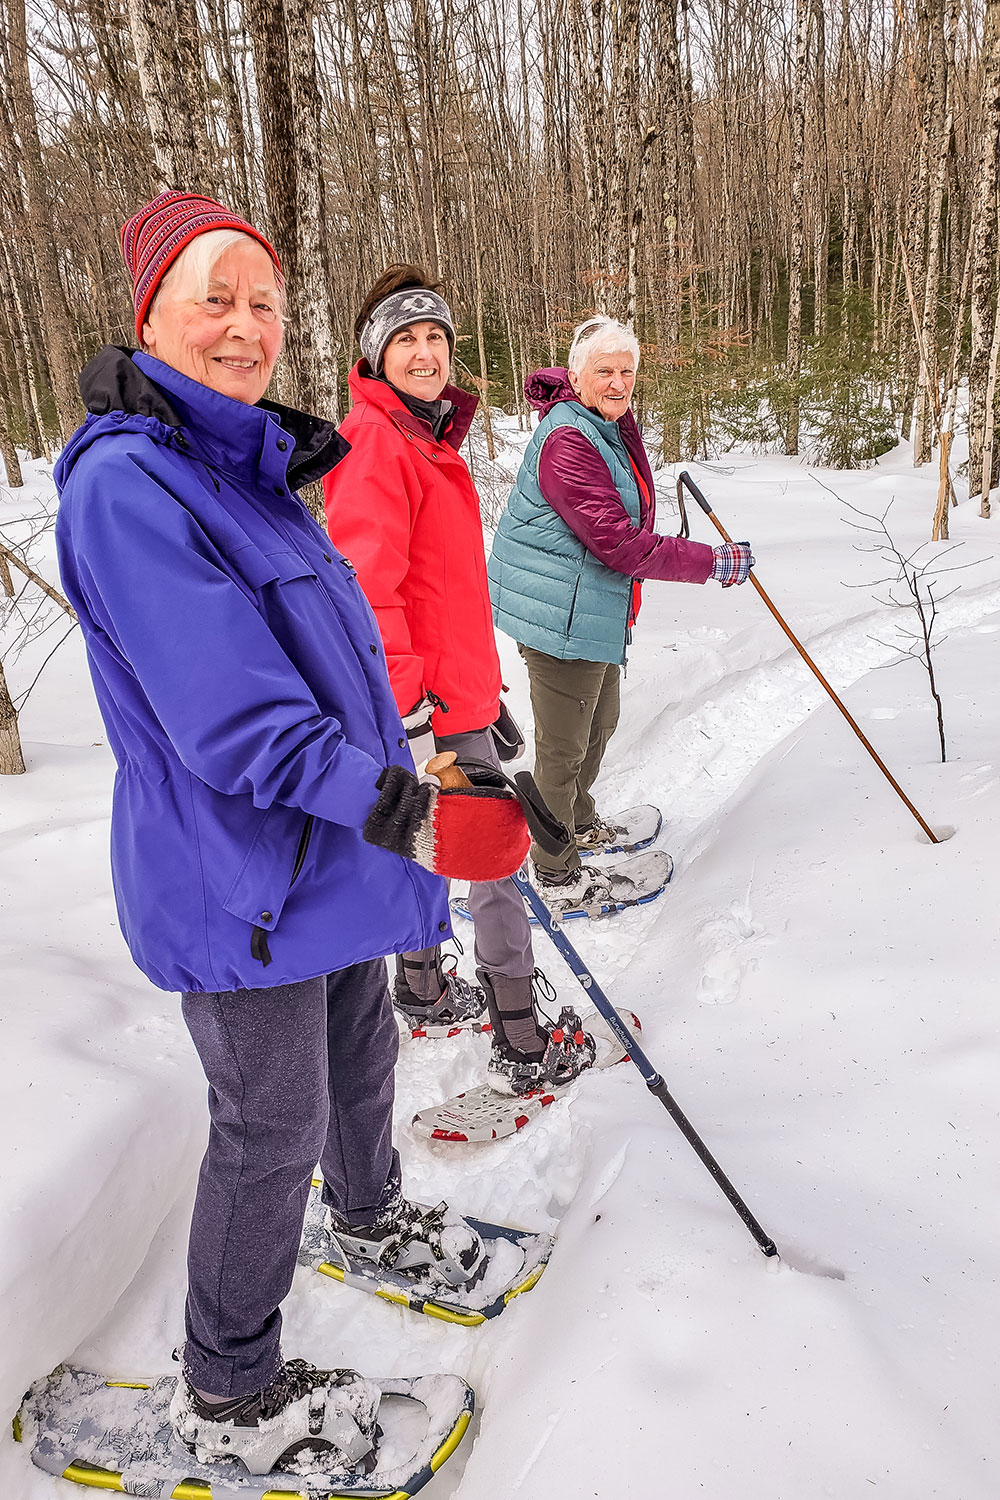 POP’s – Presbyterian Outdoor Pursuits. Winter Snowshoe Hike – Saturday, Feb. 4 at 9:00am